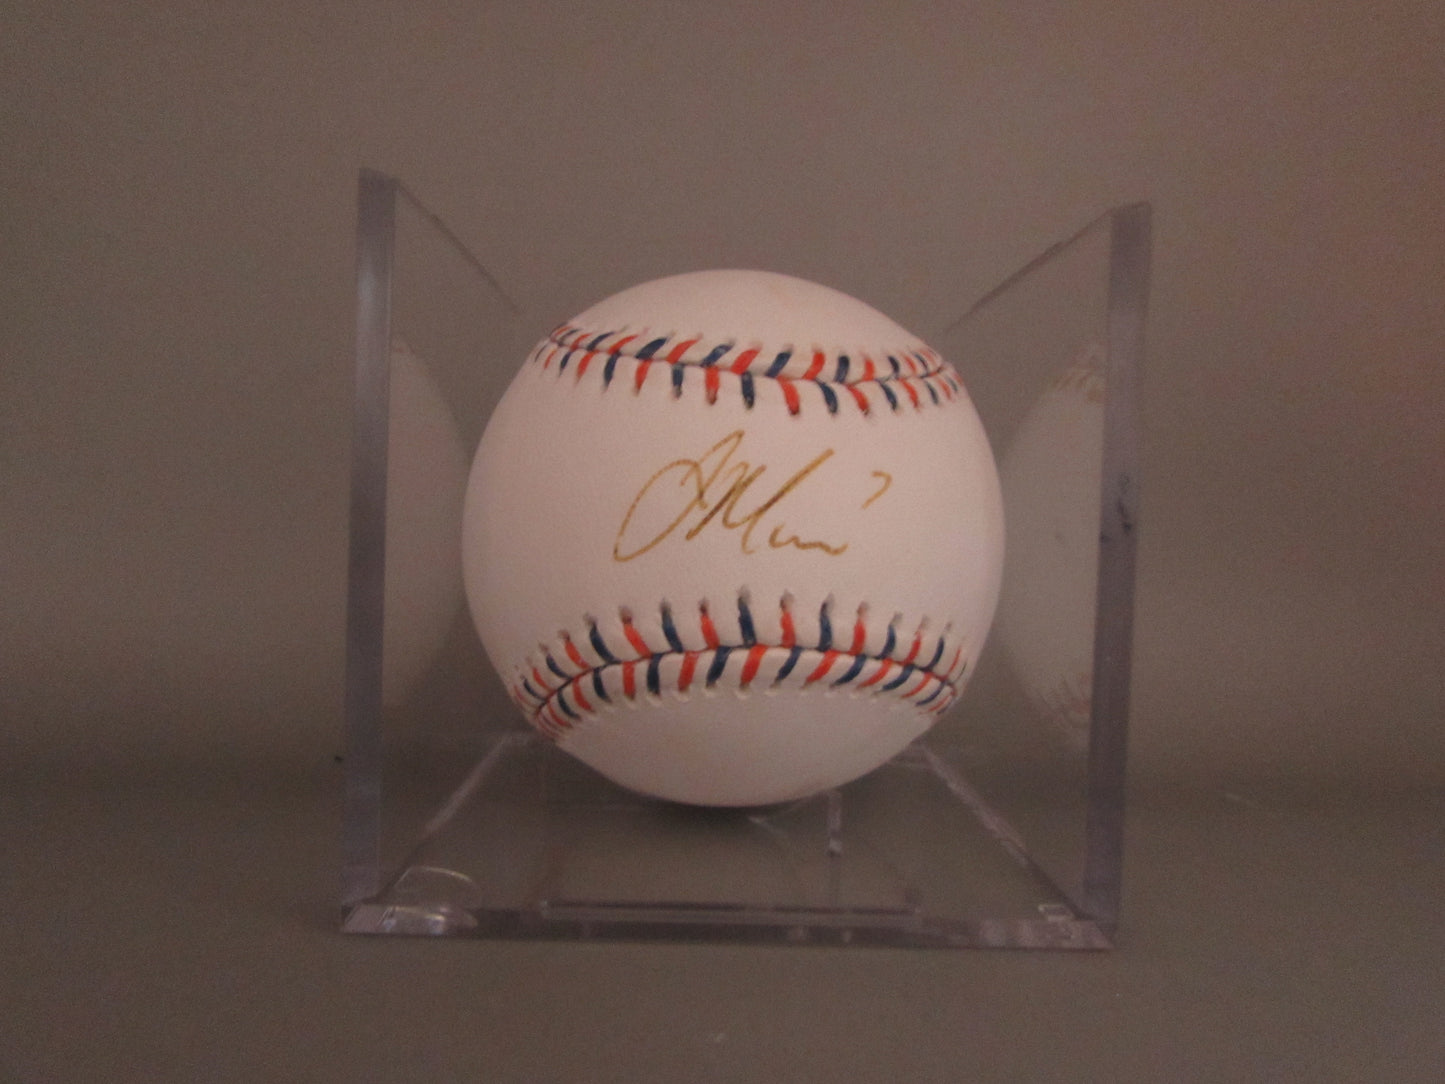 Joe Mauer signed baseball